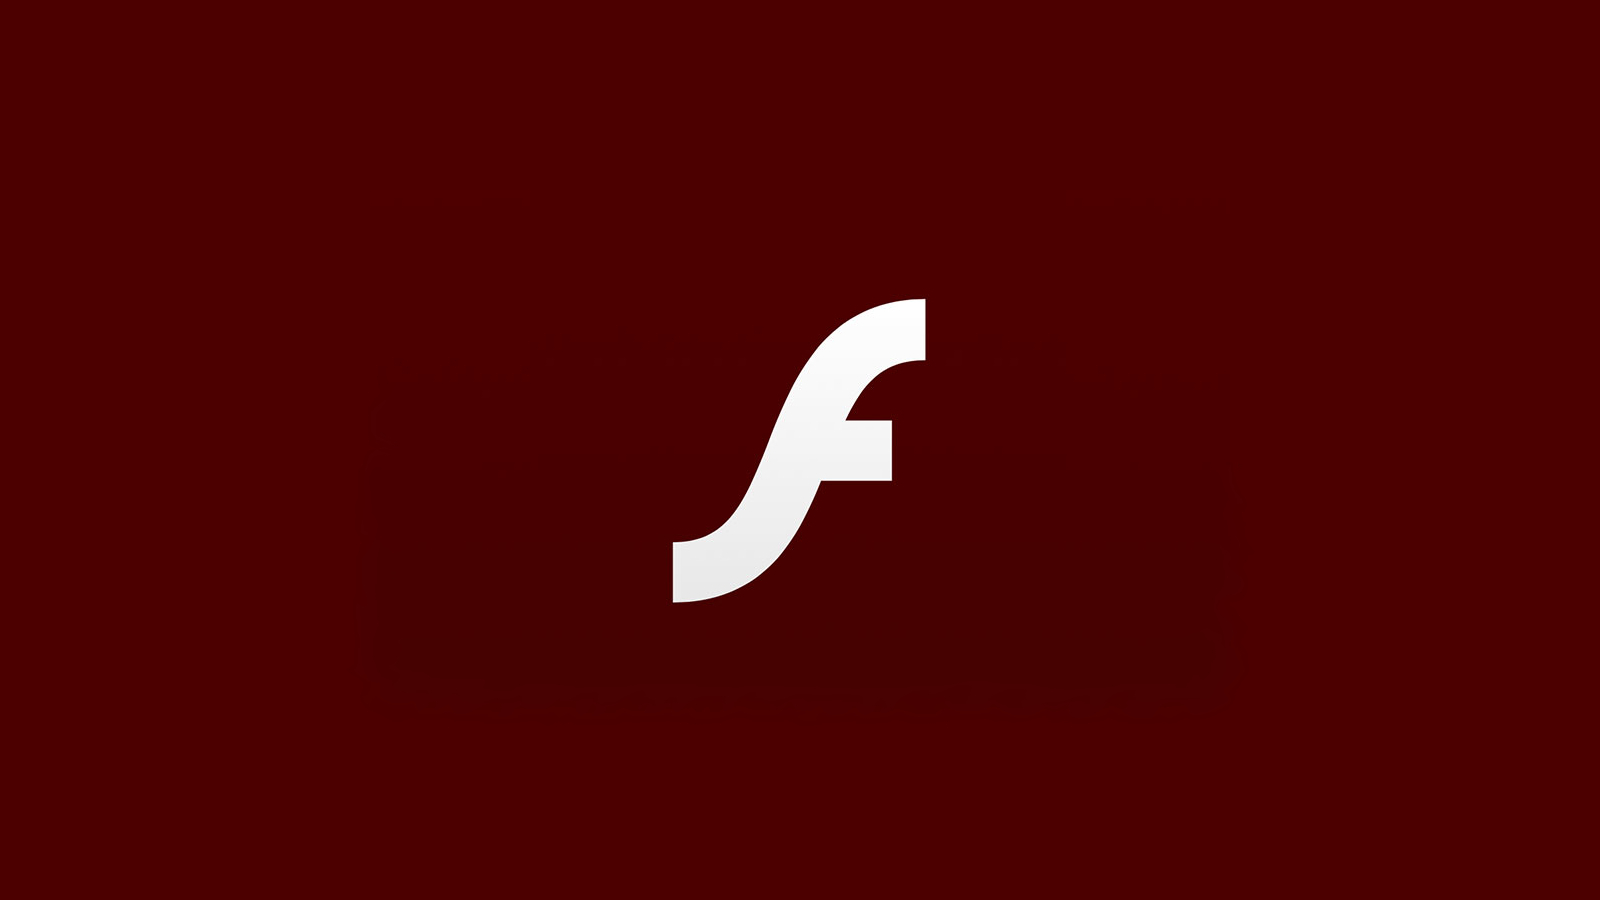 esp8266 flash tool for mac